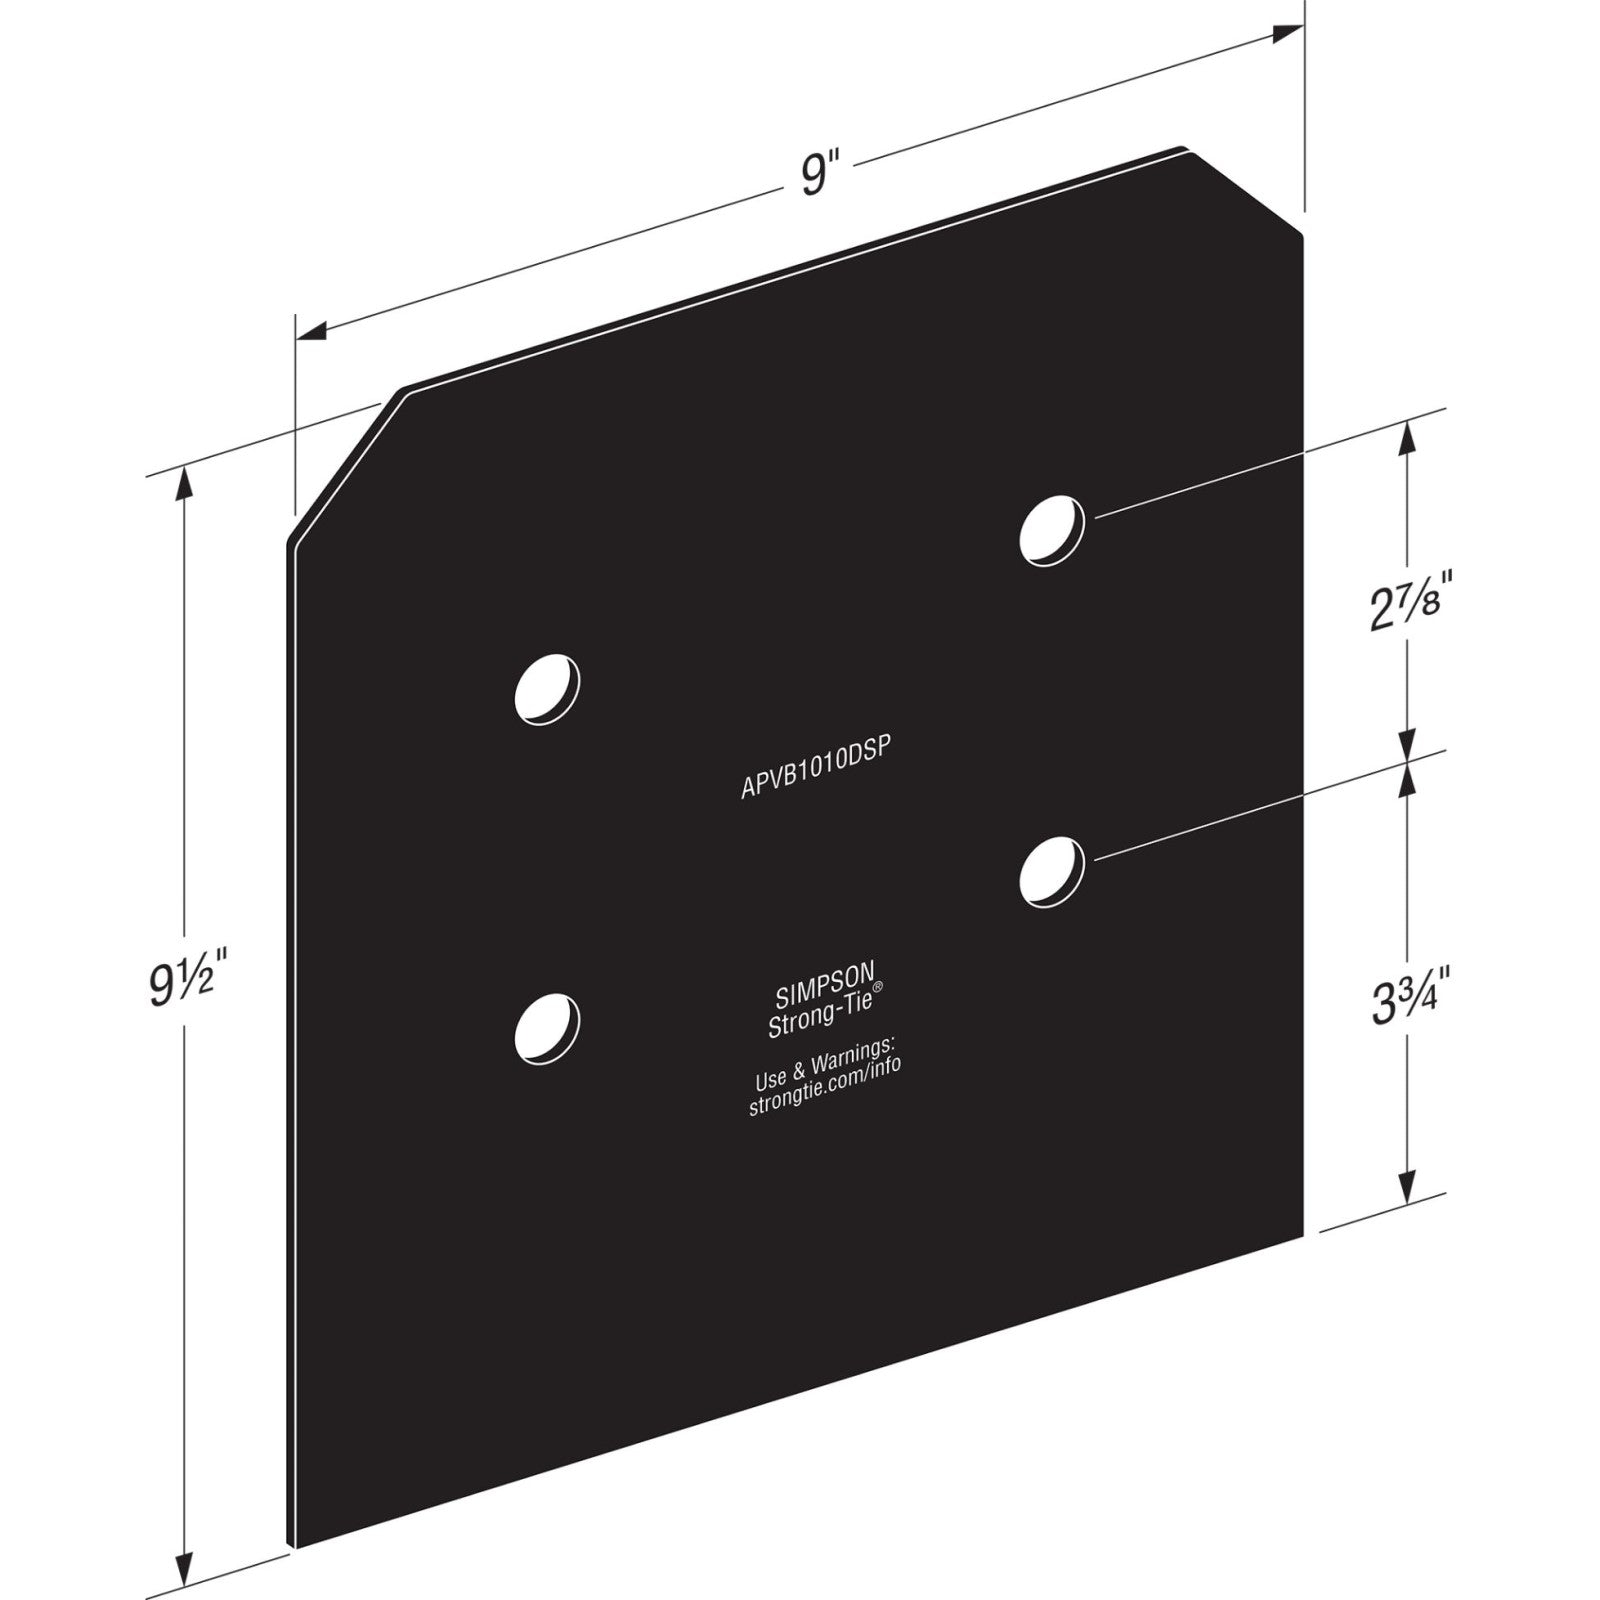 Simpson APVB1010DSP Avant Decorative Post Base Plates Black Powder Coat image 1 of 4 image 2 of 4 image 3 of 4